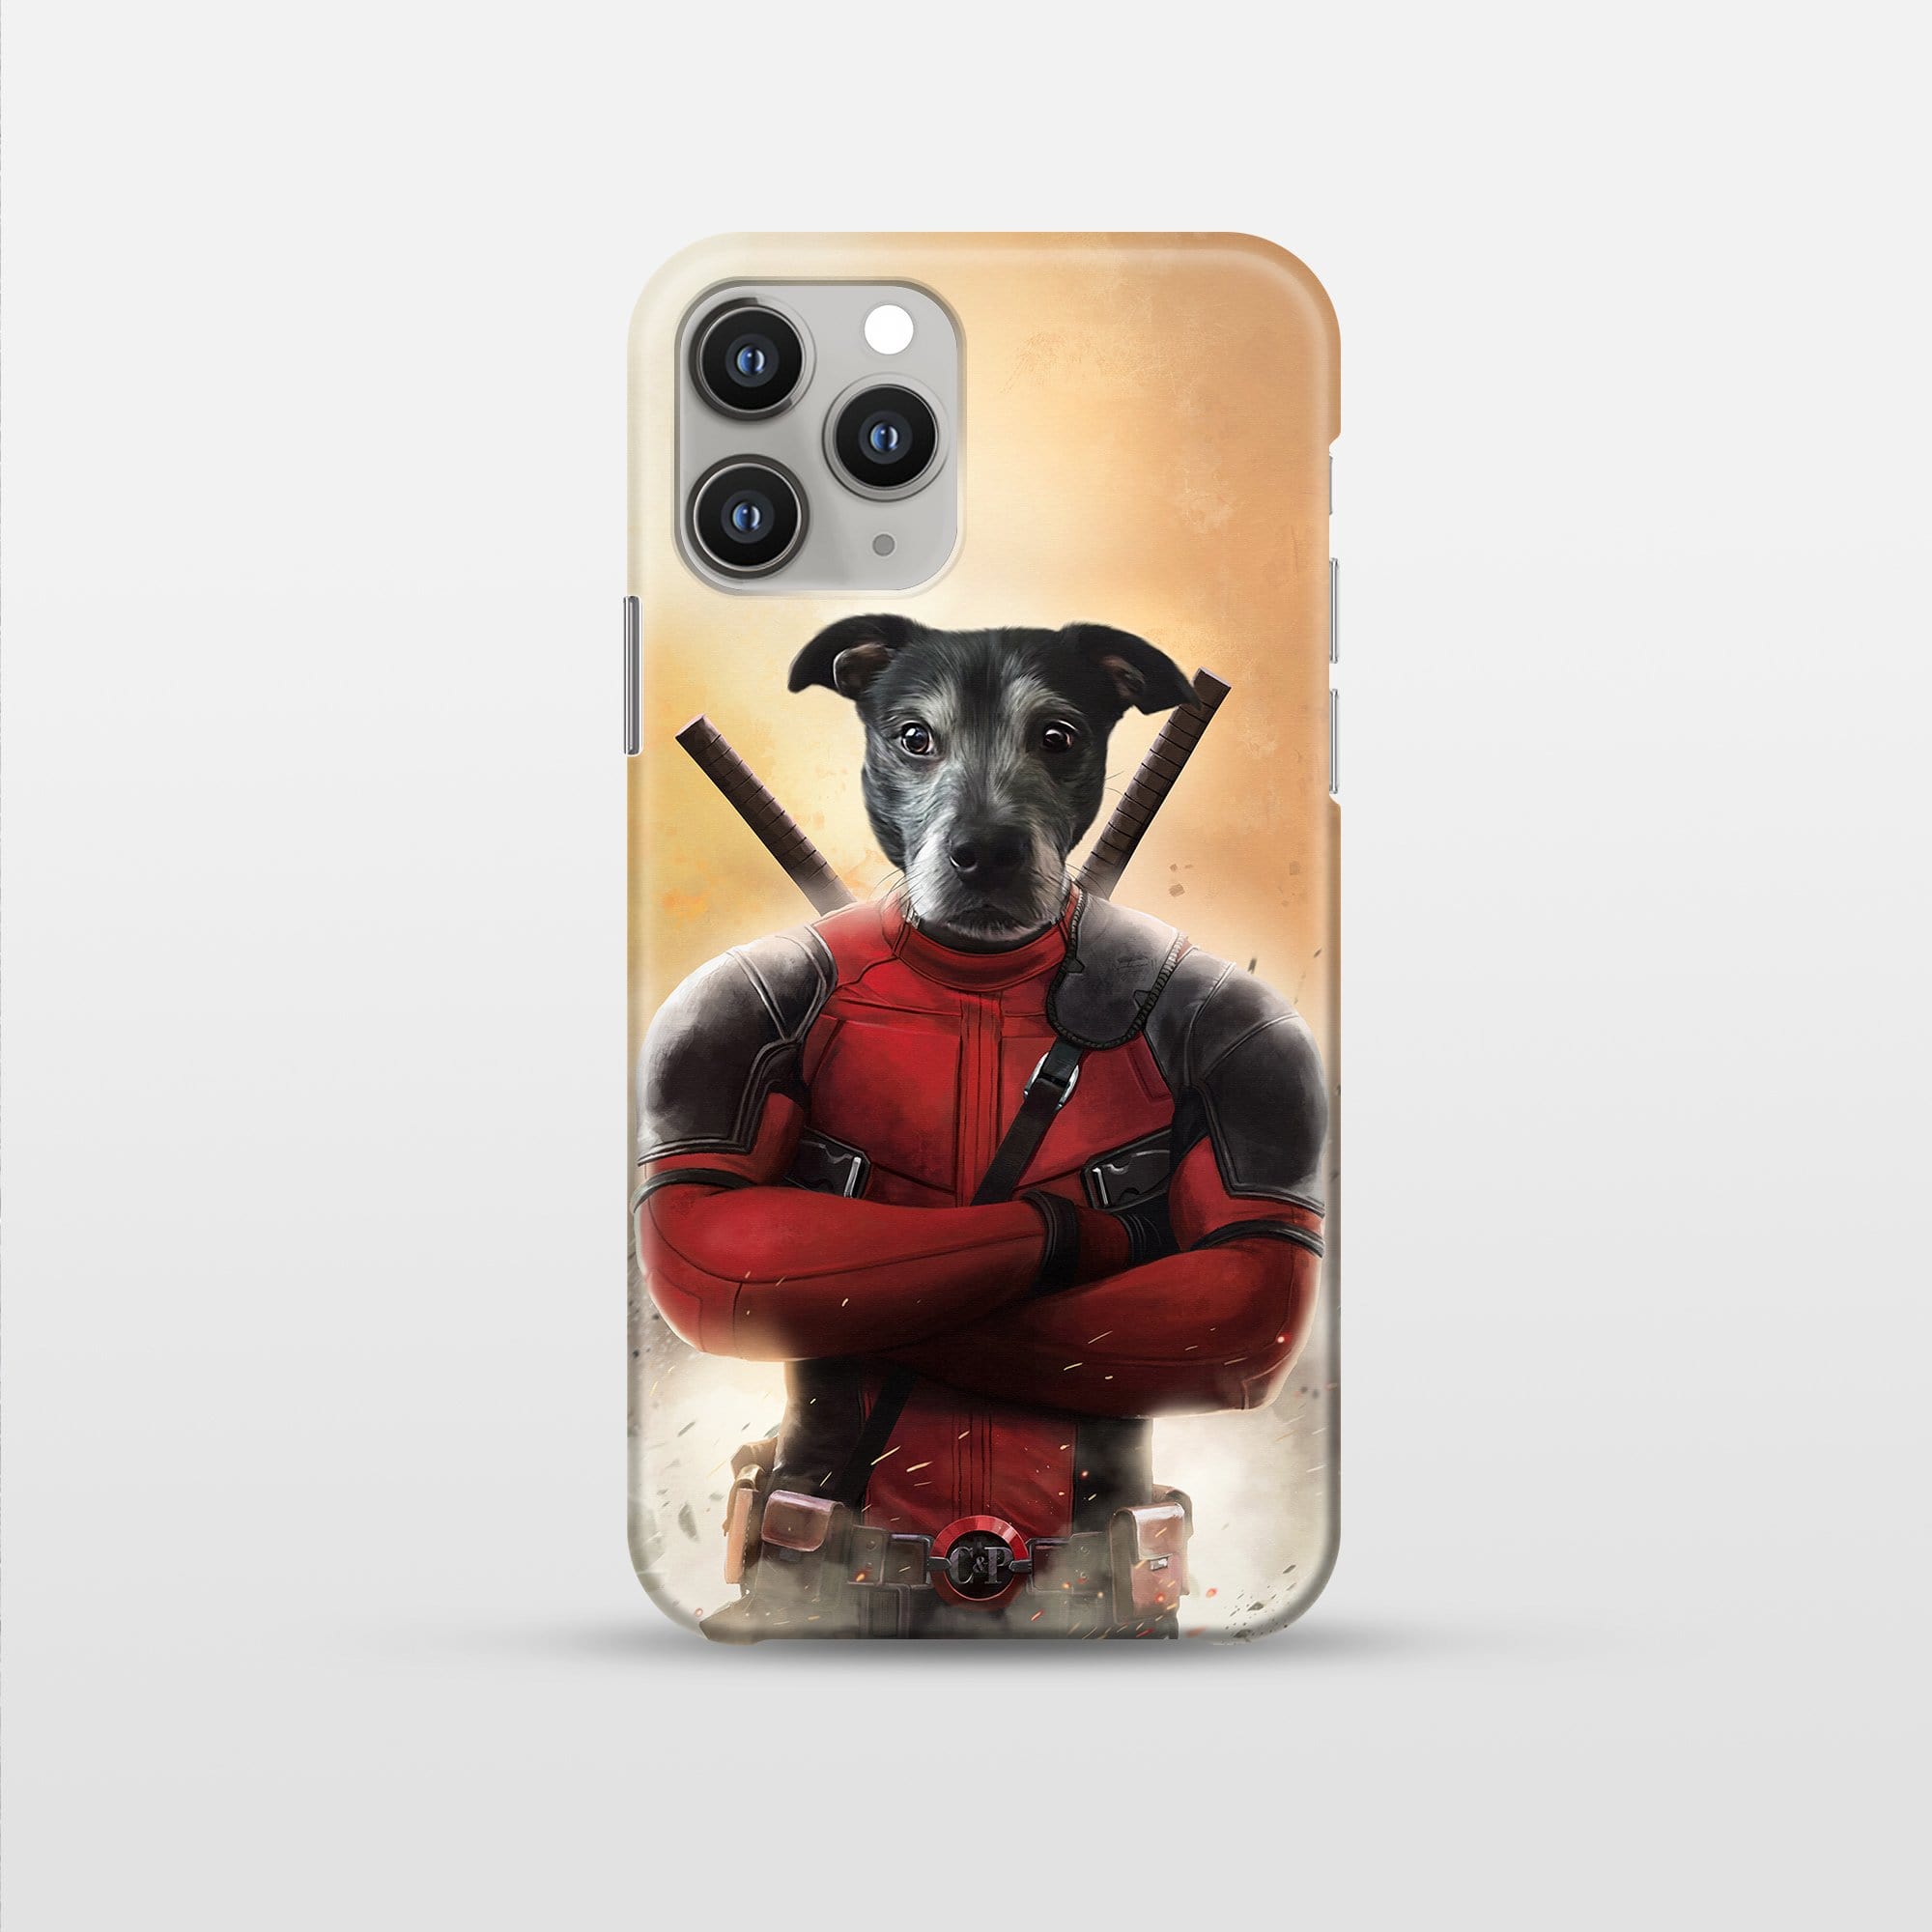 The Deadpawl - Pet Art Phone Case